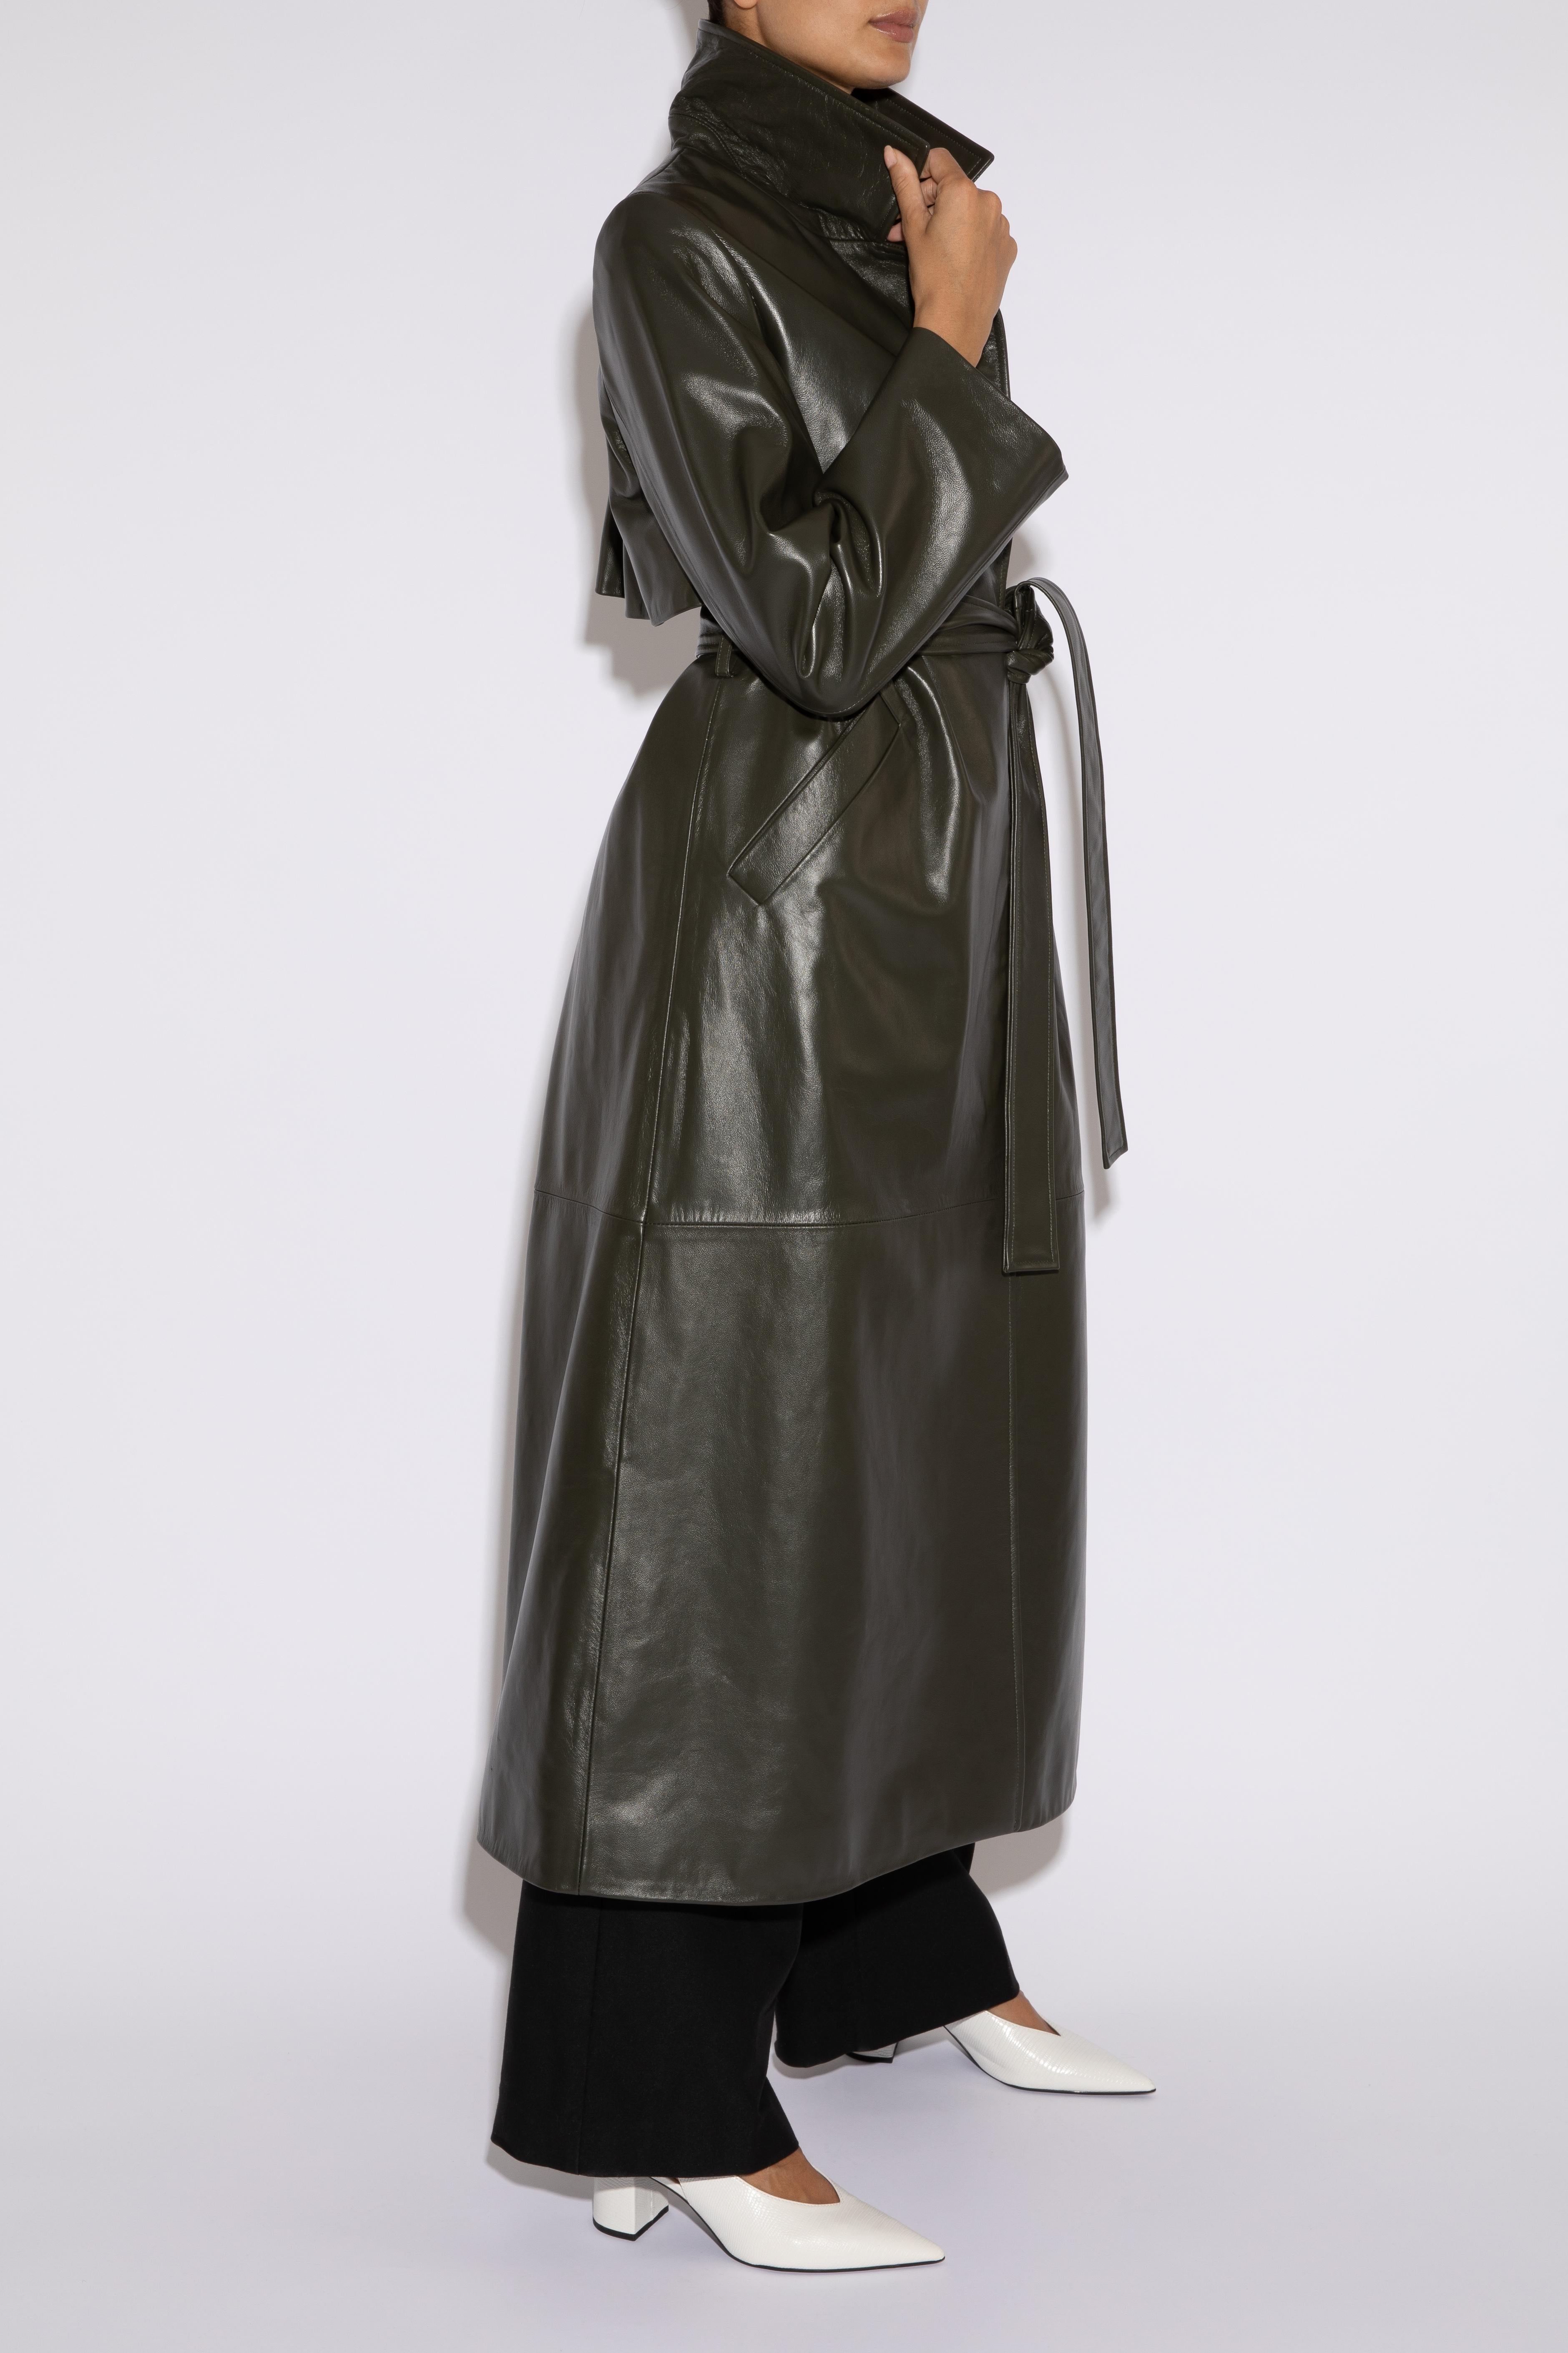 Verheyen London Leather Trench Coat in Dark Khaki Green - Size uk 14 For Sale 1